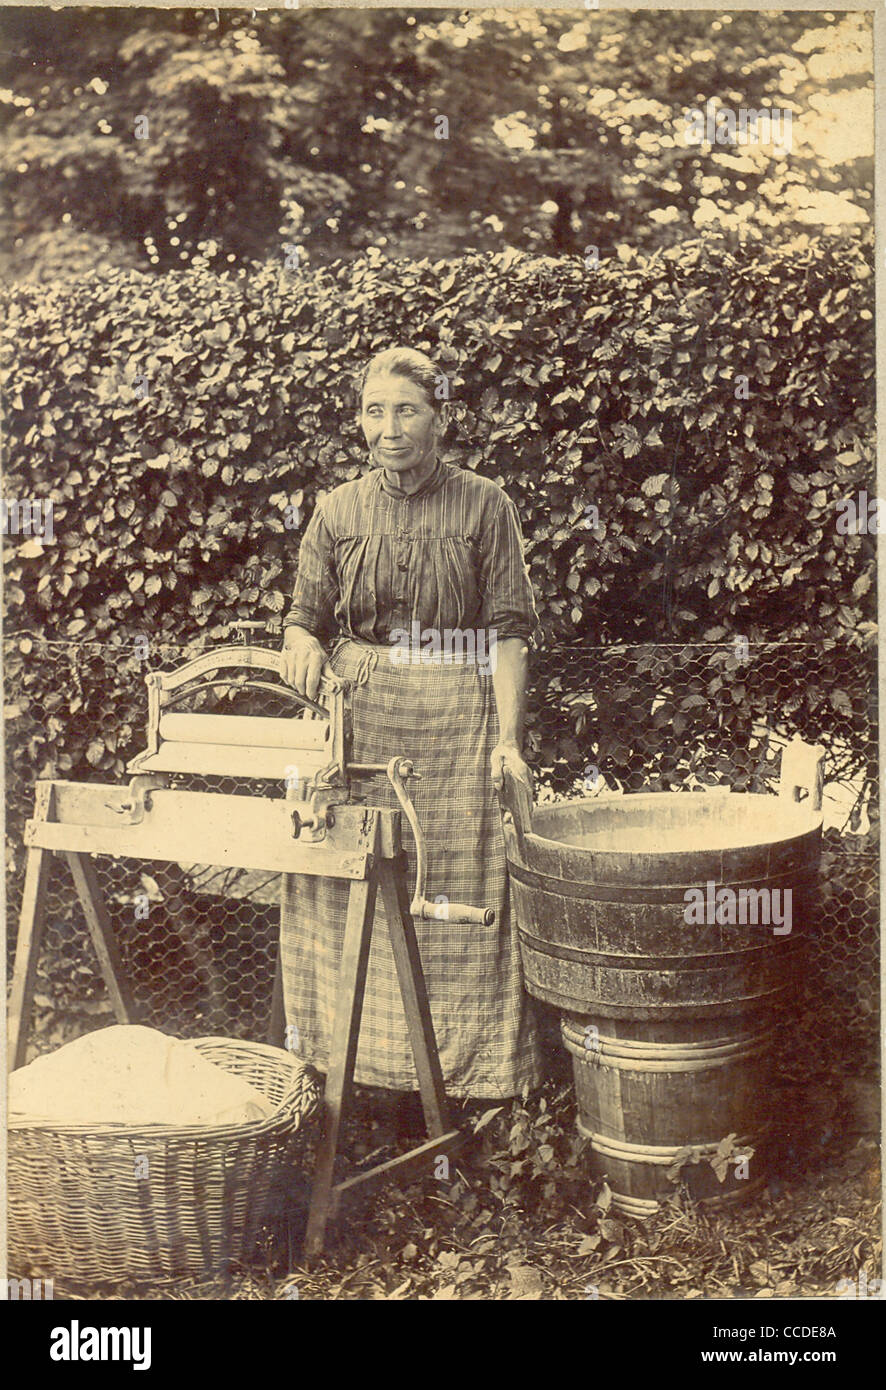 Cabinet portrait photograph of itinerant washerwoman Stock Photo